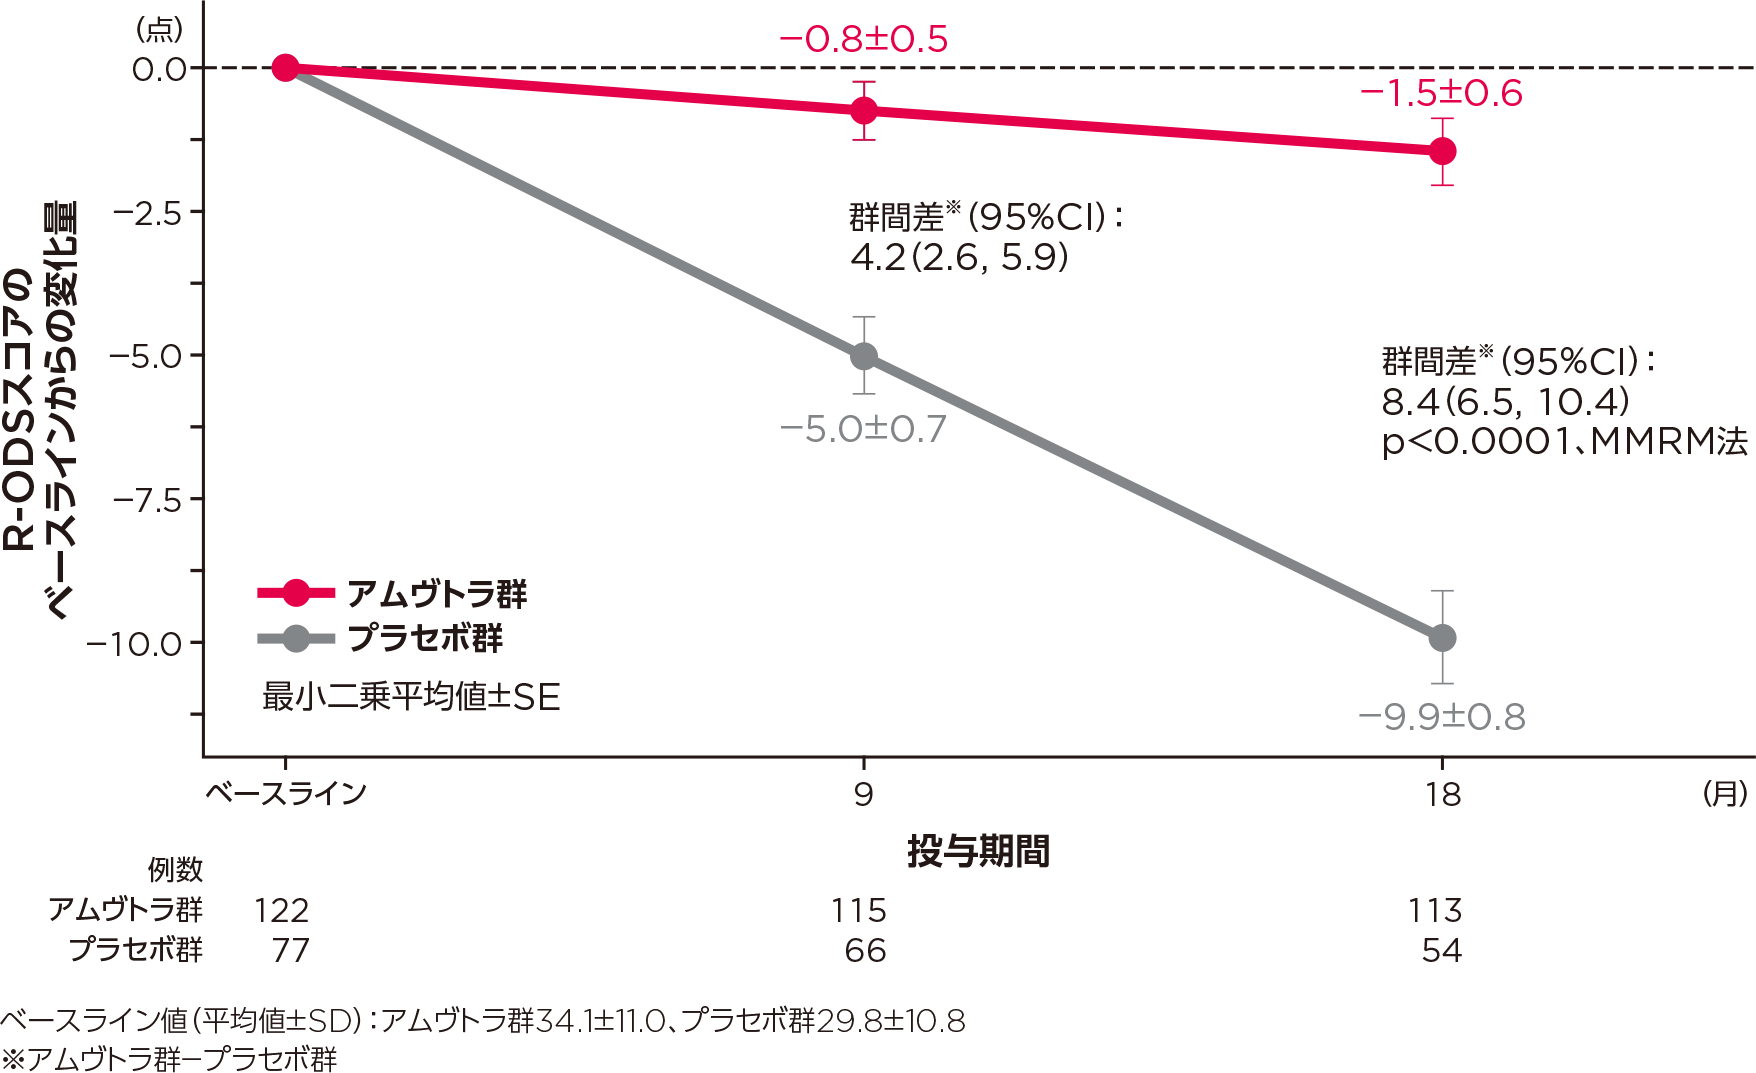 mITT集団におけるR-ODSスコアのベースラインからの変化量の推移のグラフ